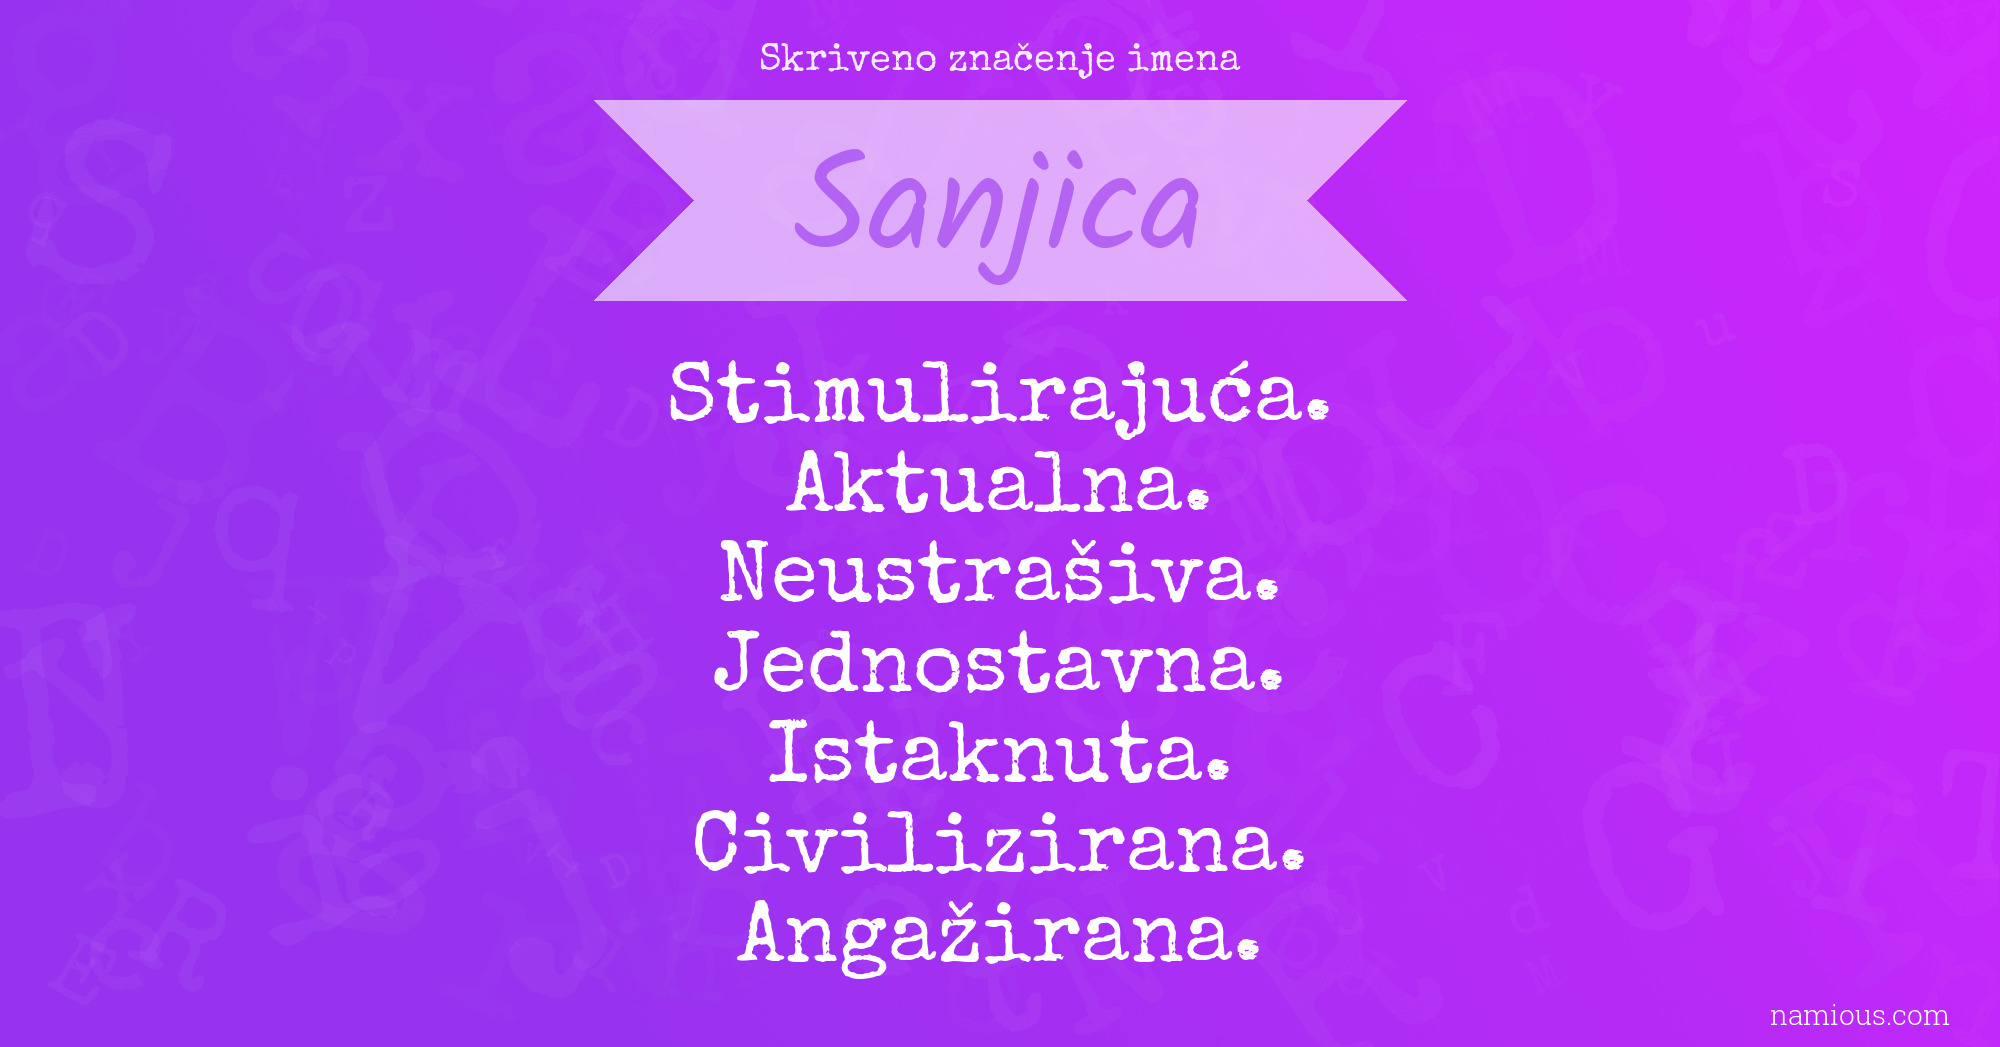 Skriveno značenje imena Sanjica